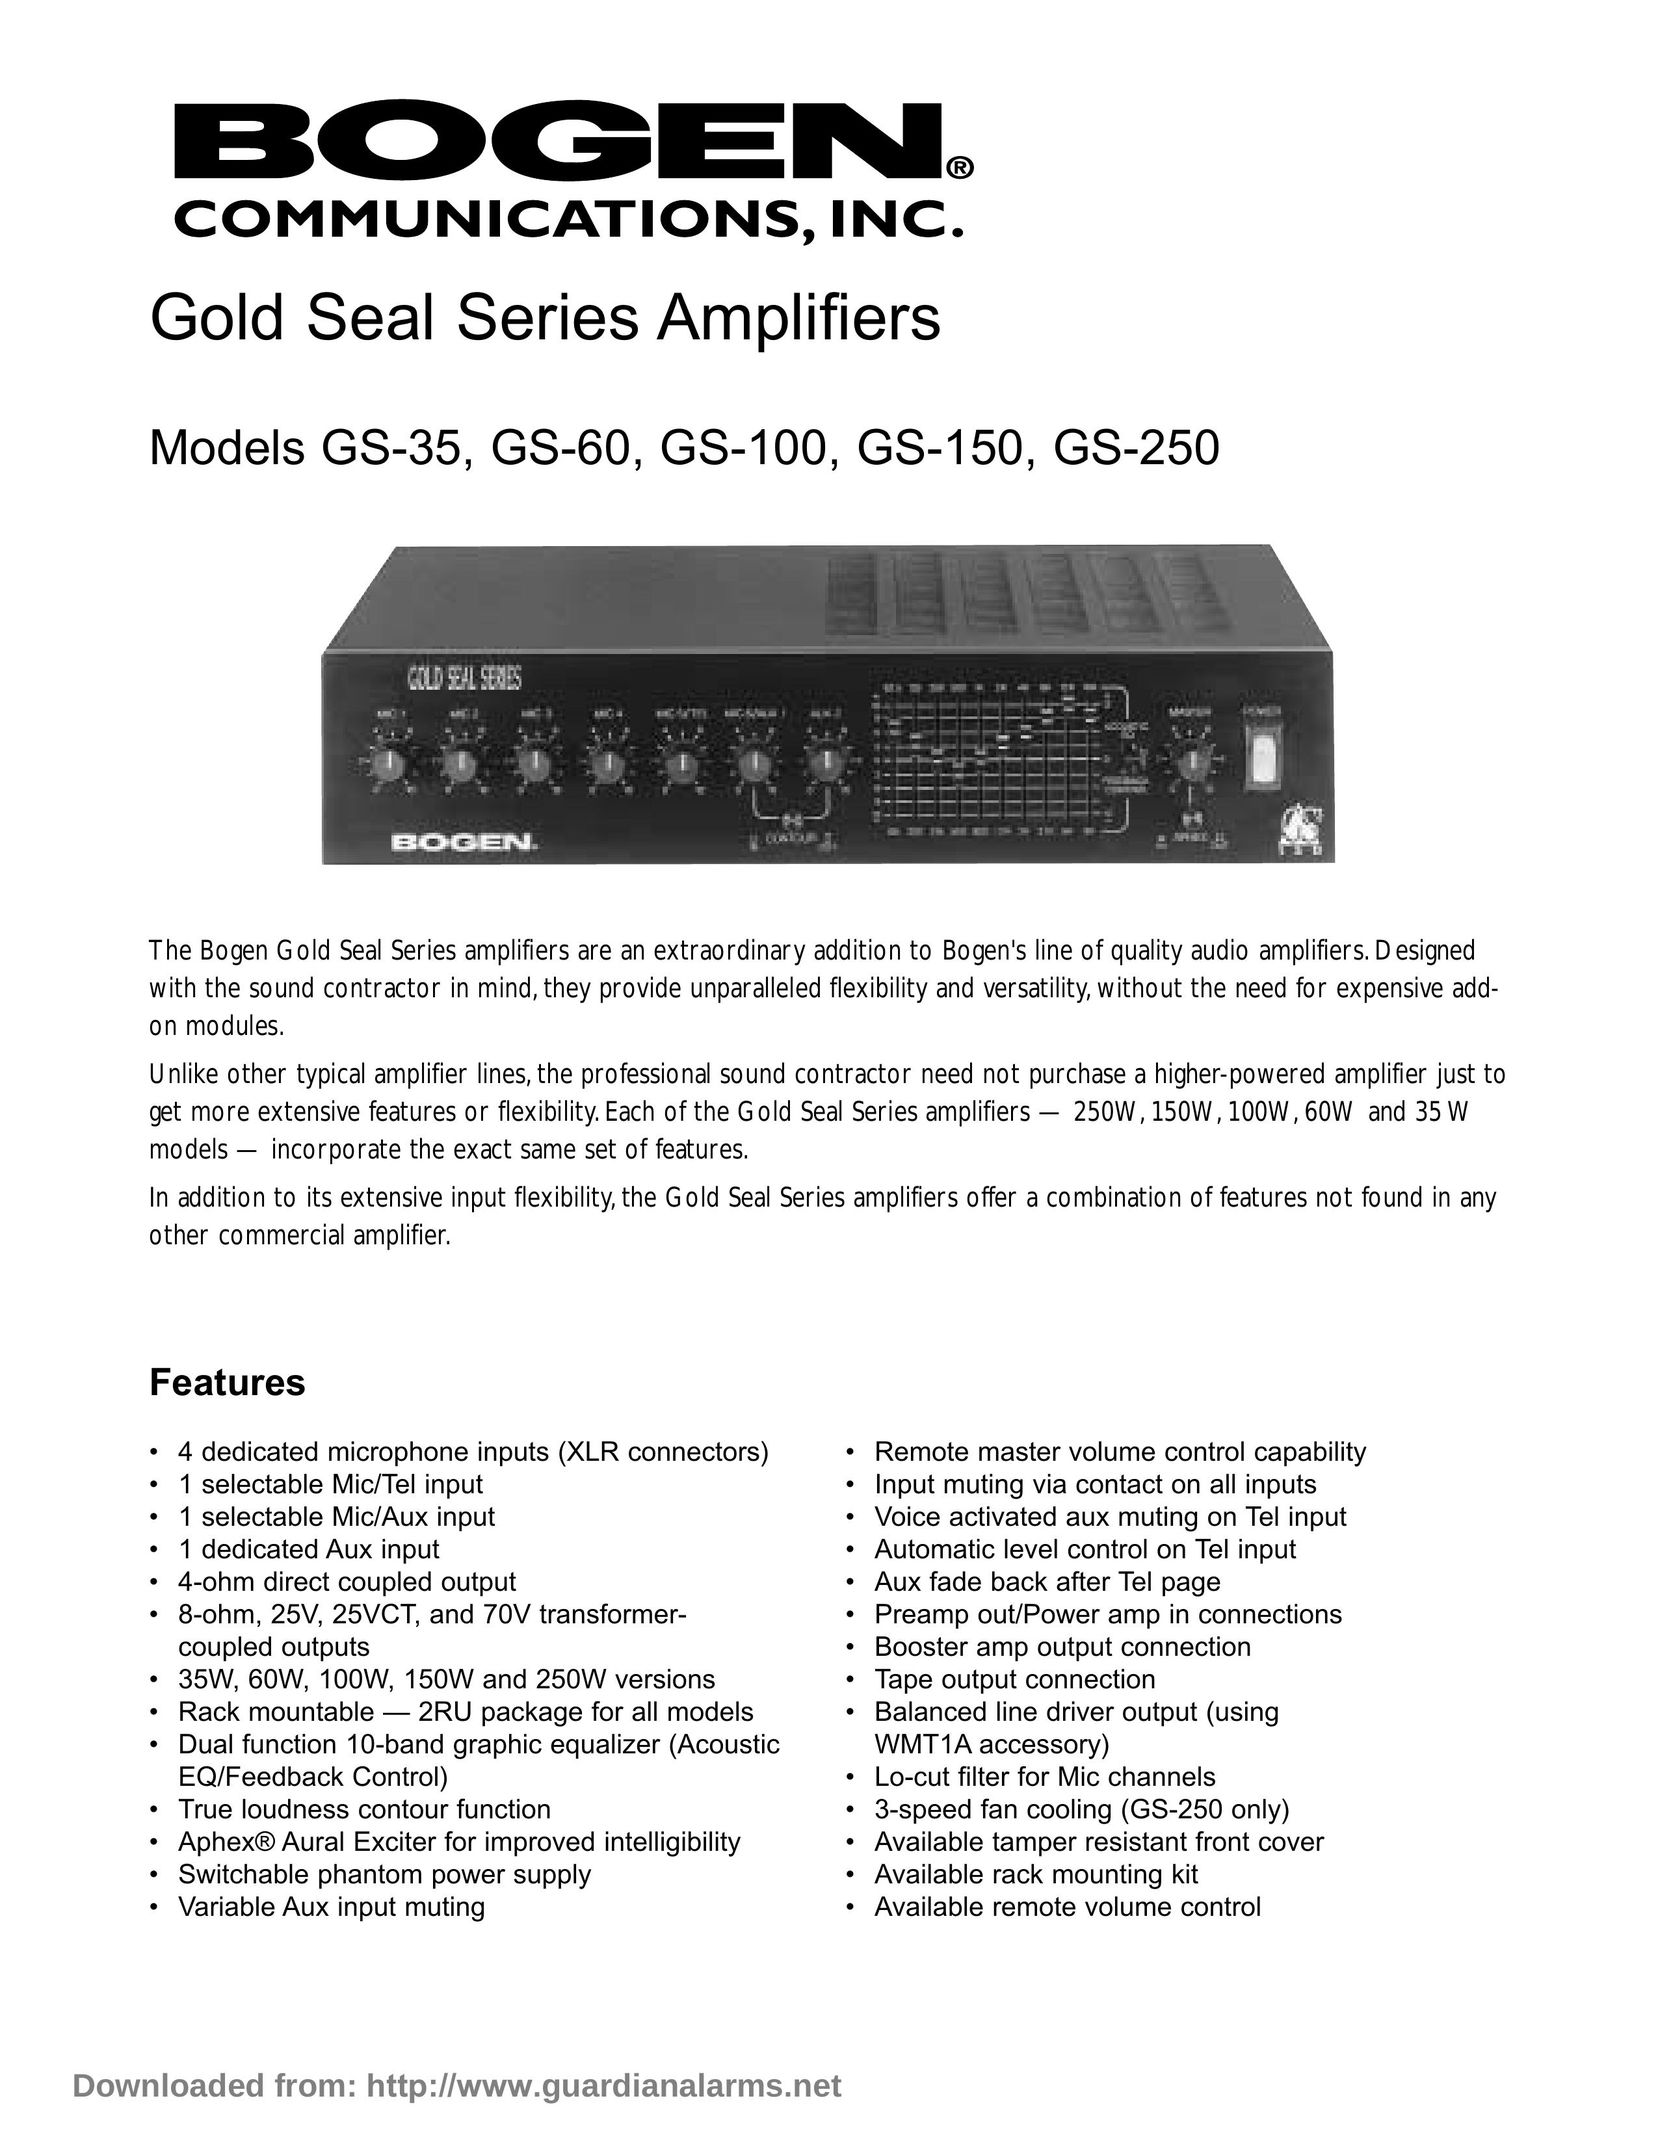 Bogen GS-250 Stereo Amplifier User Manual